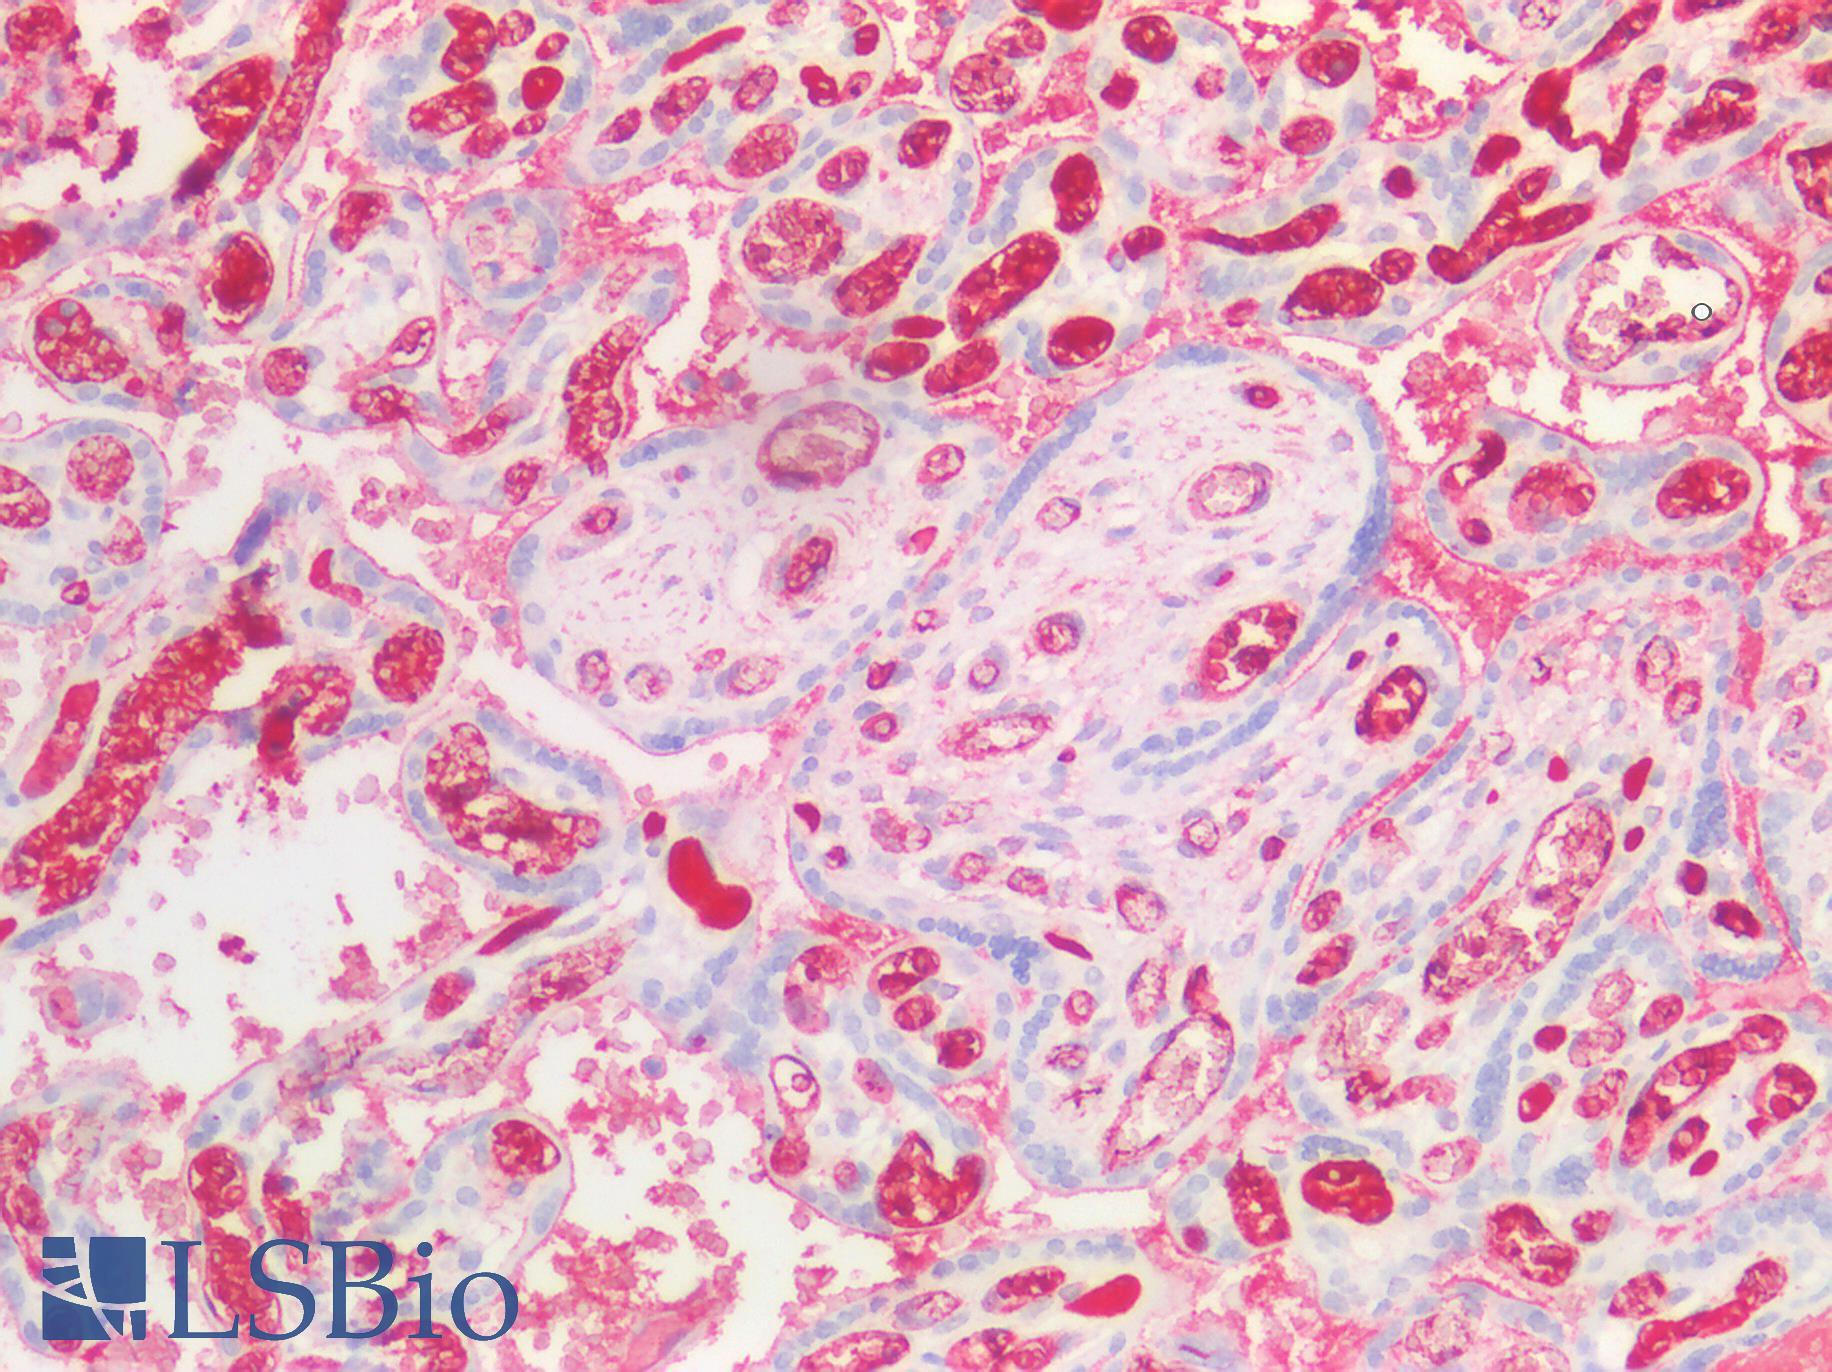 FGA / Fibrinogen Alpha Antibody - Human Placenta: Formalin-Fixed, Paraffin-Embedded (FFPE)